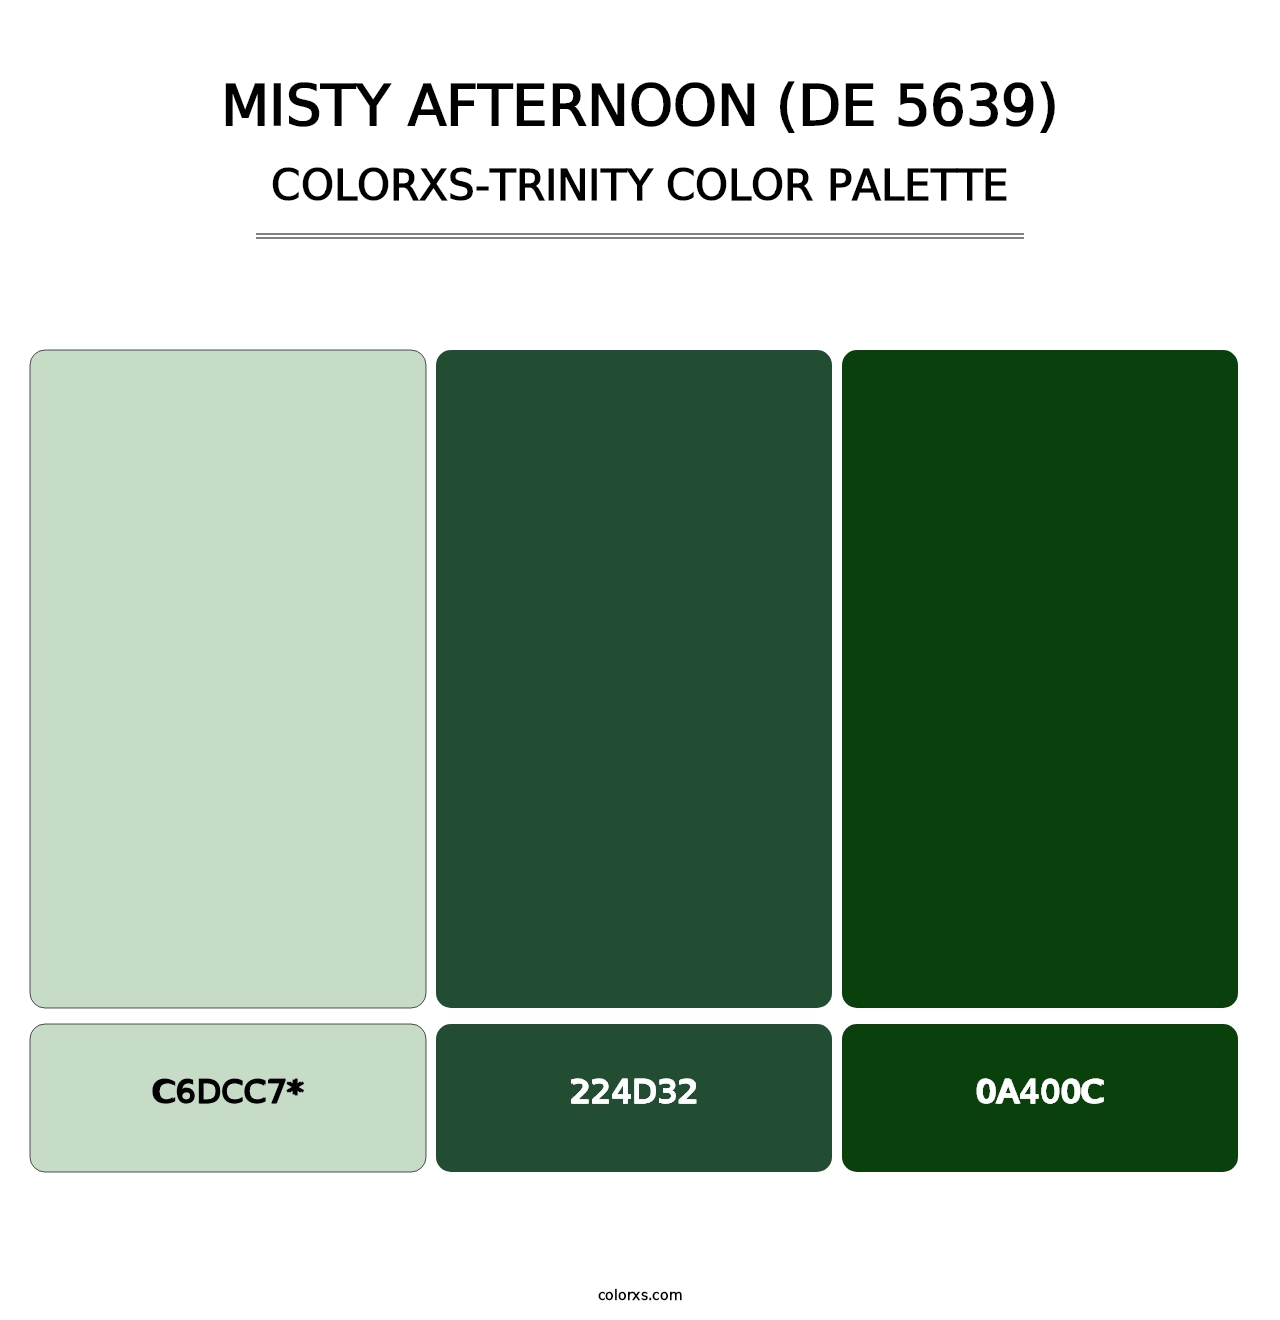 Misty Afternoon (DE 5639) - Colorxs Trinity Palette